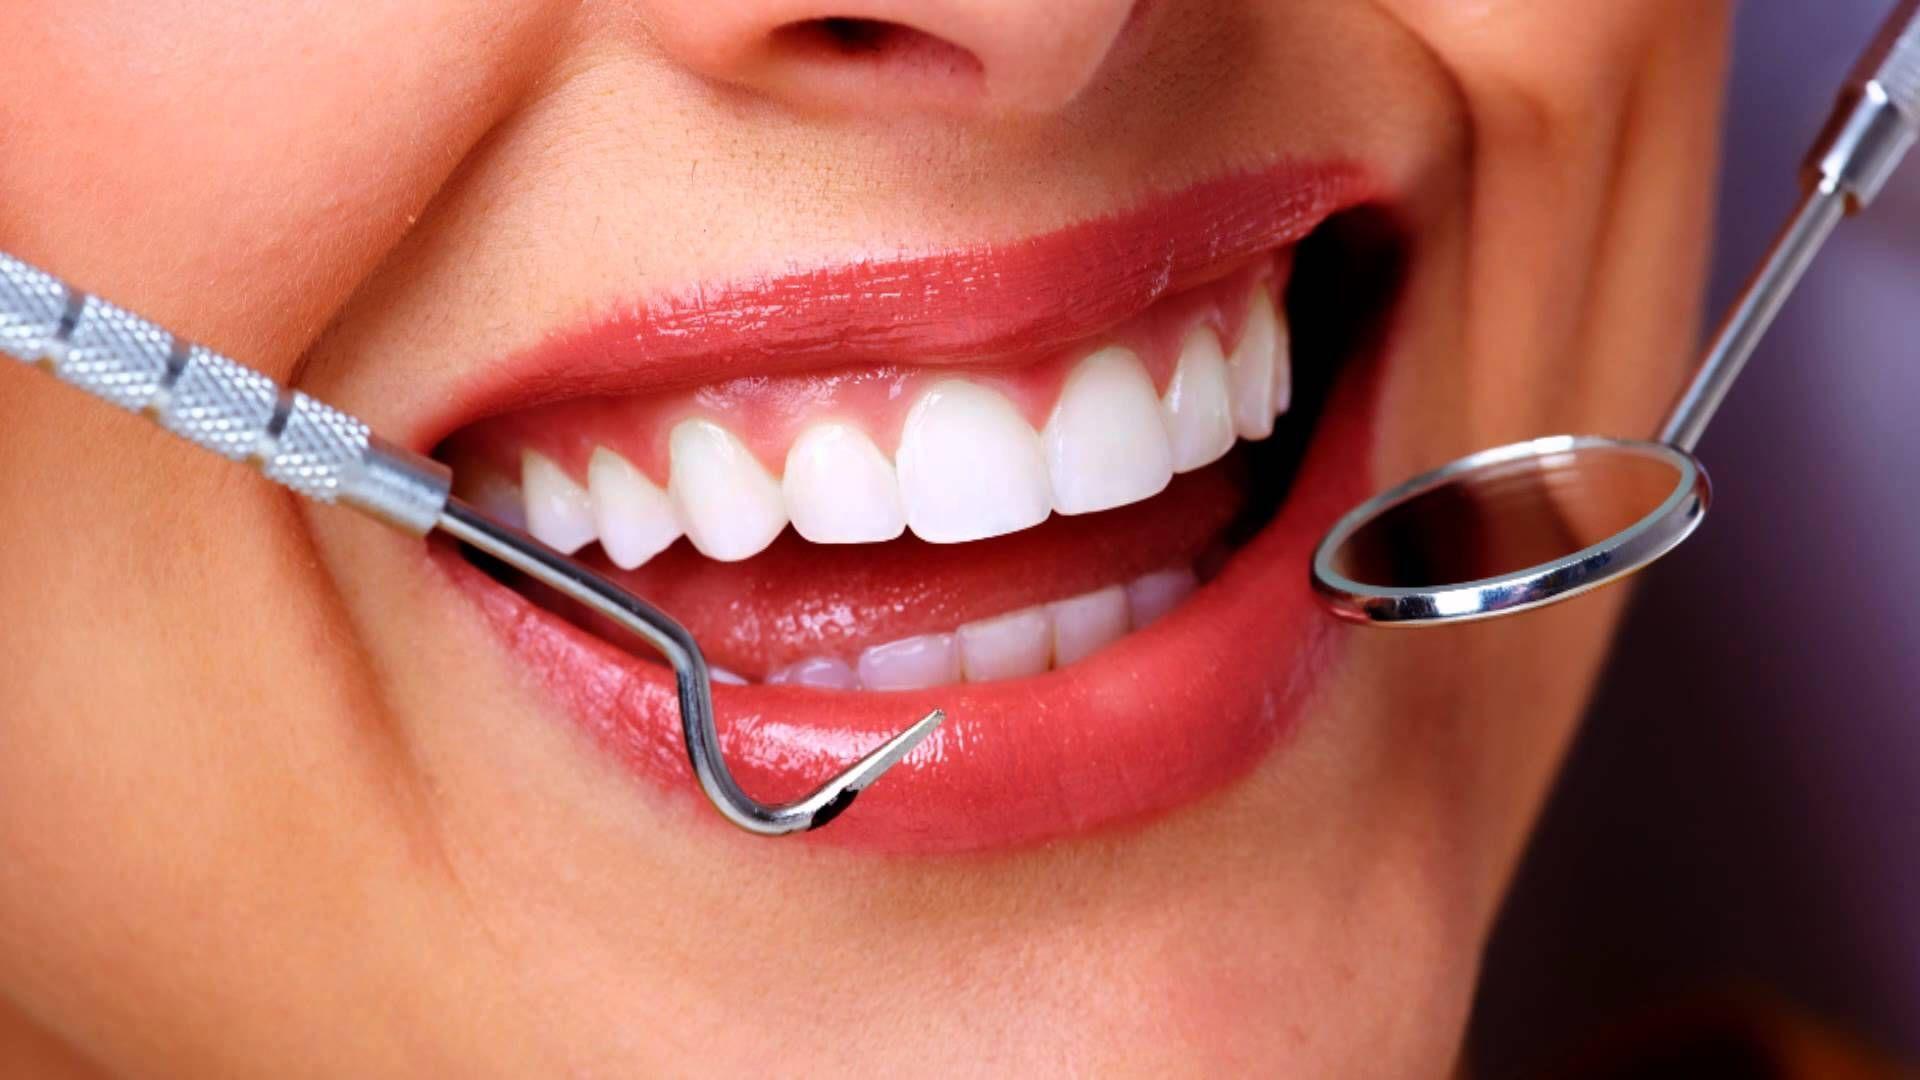 Smile Dental Wallpapers - Top Free Smile Dental ...